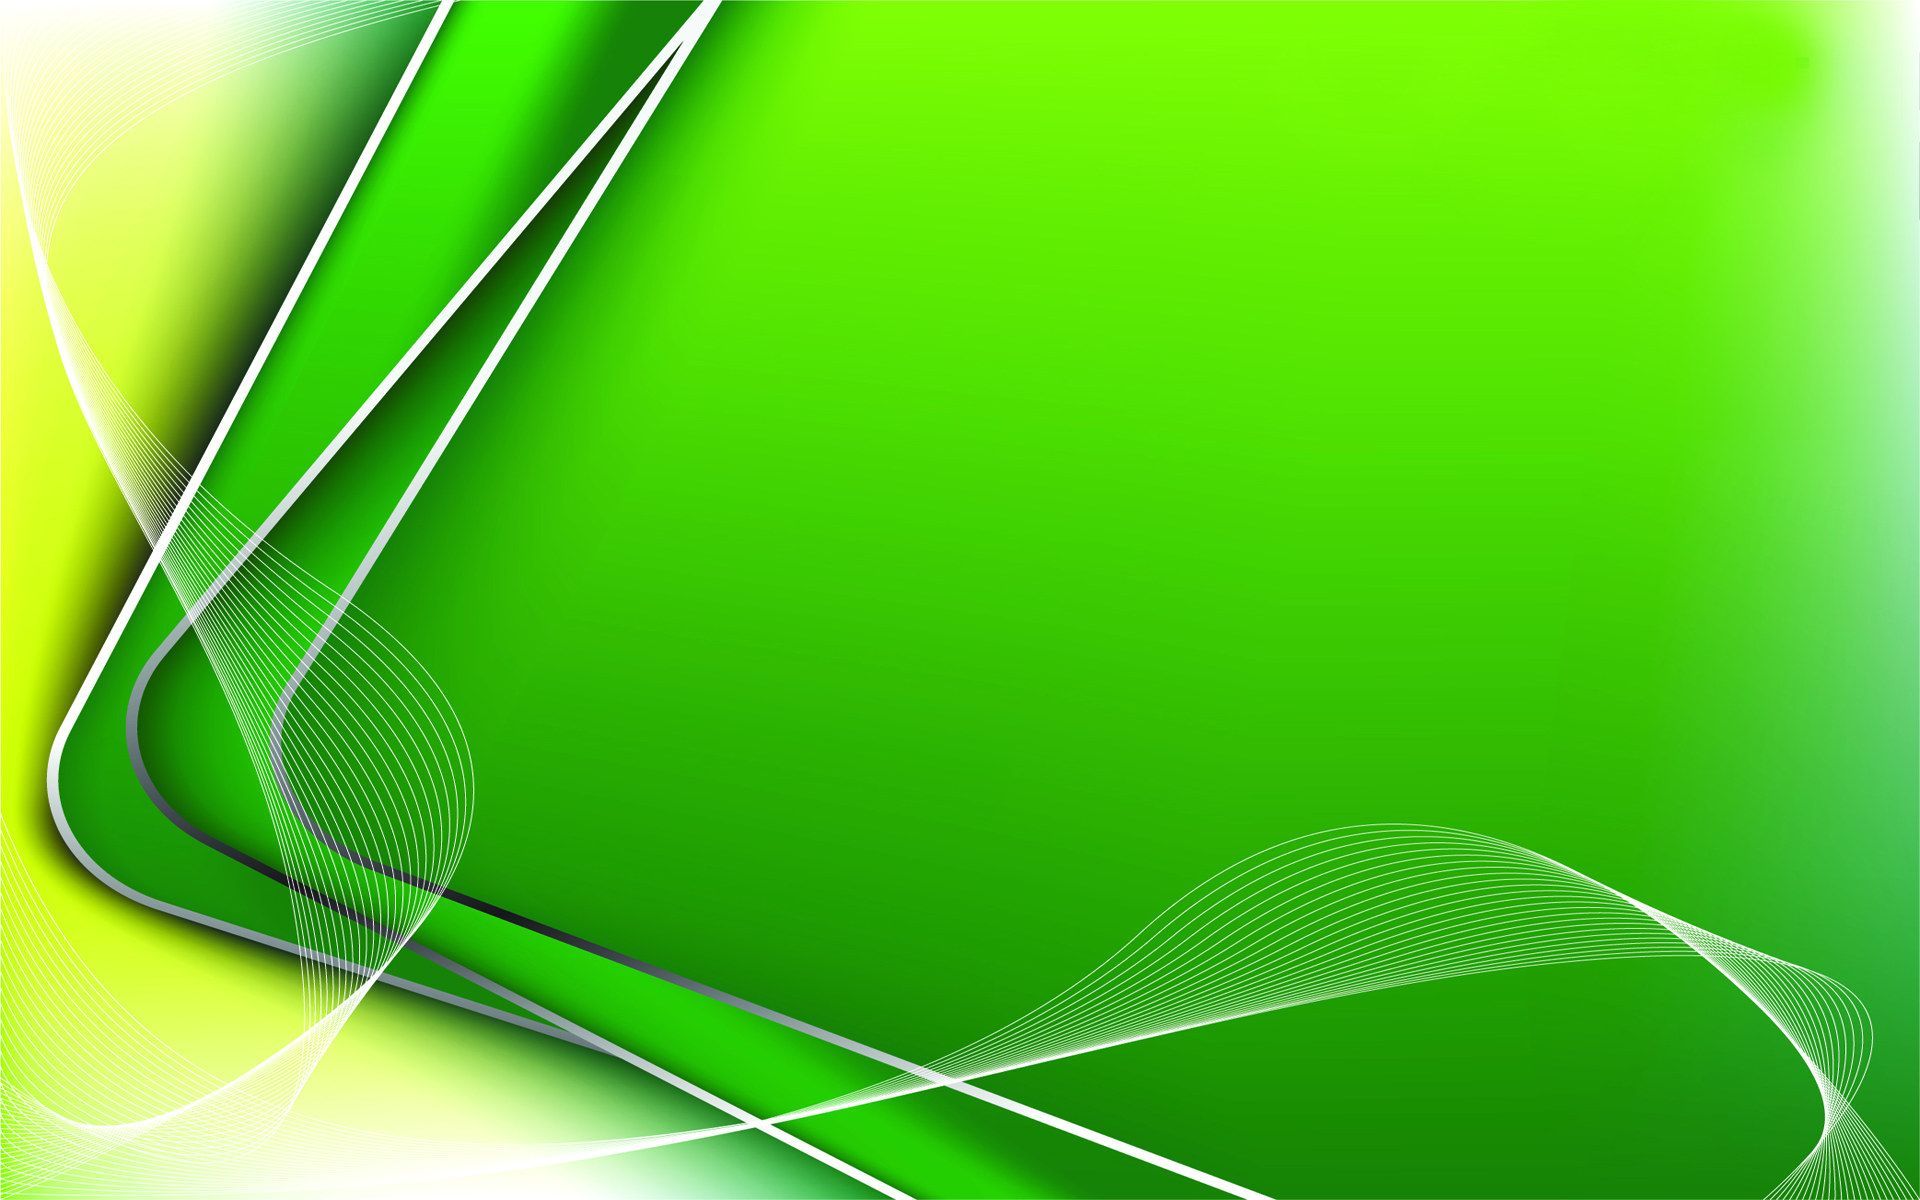 iPadOS Wallpaper 4K Green Stock White background 1549